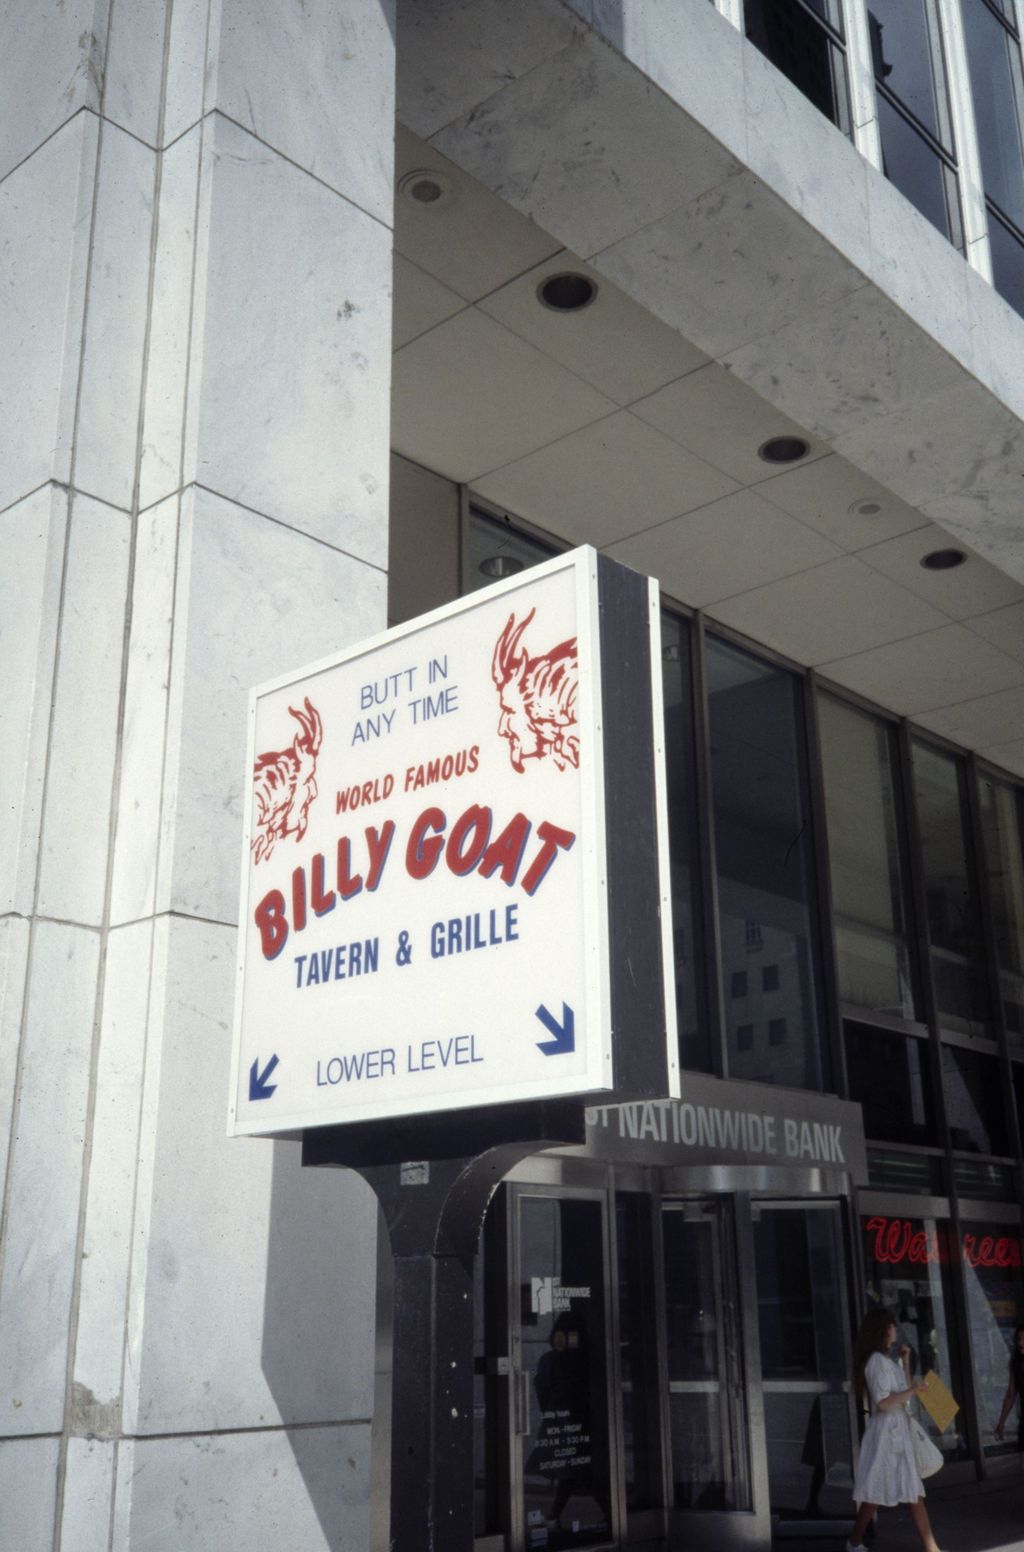 Billy Goat Tavern & Grille sign